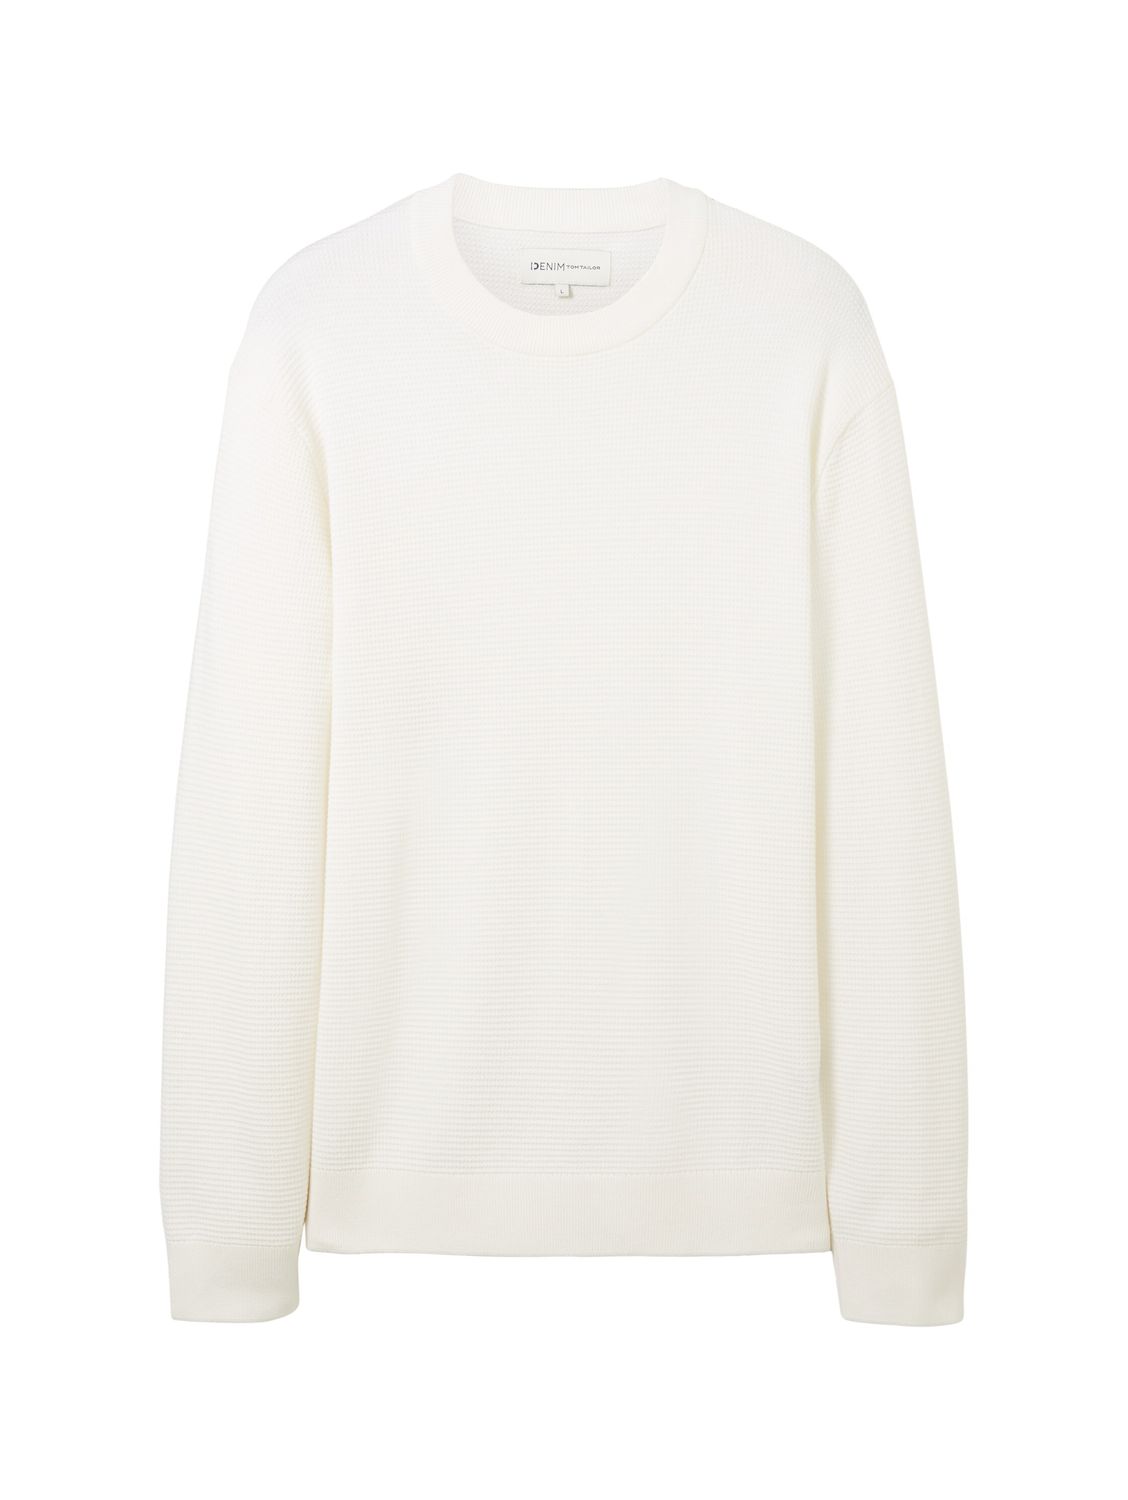 Пуловер TOM TAILOR Denim STRUCTURED BASIC, белый пуловер tom tailor denim structured basic серый